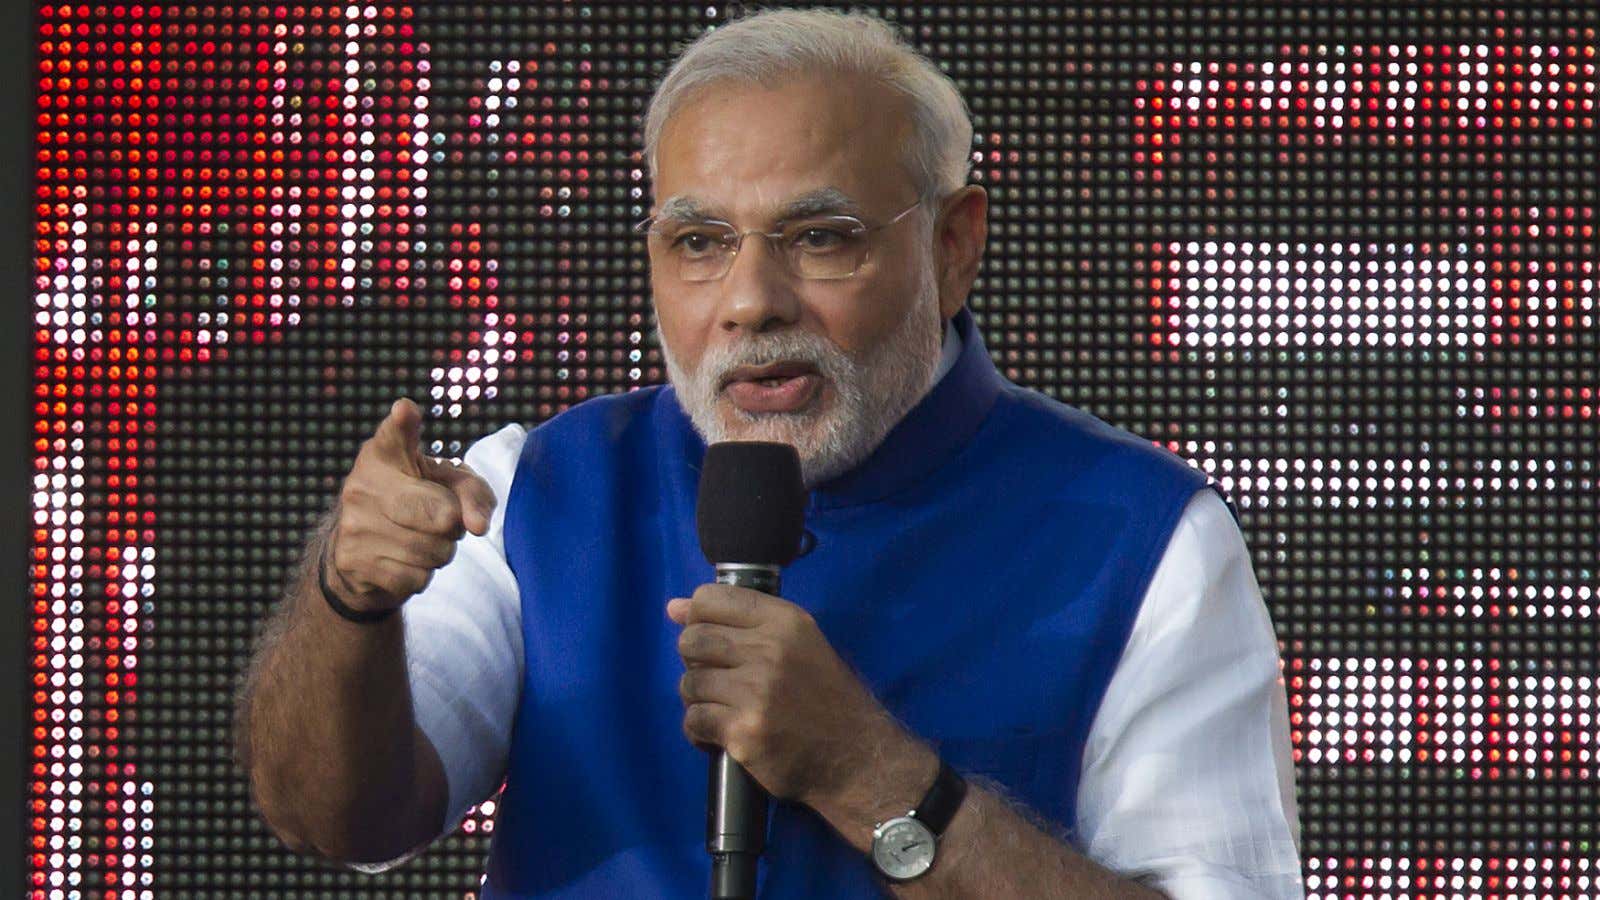 India’s Prime Minster Narendra Modi speaks on stage during the Global Citizen Festival concert in Central Park in New York